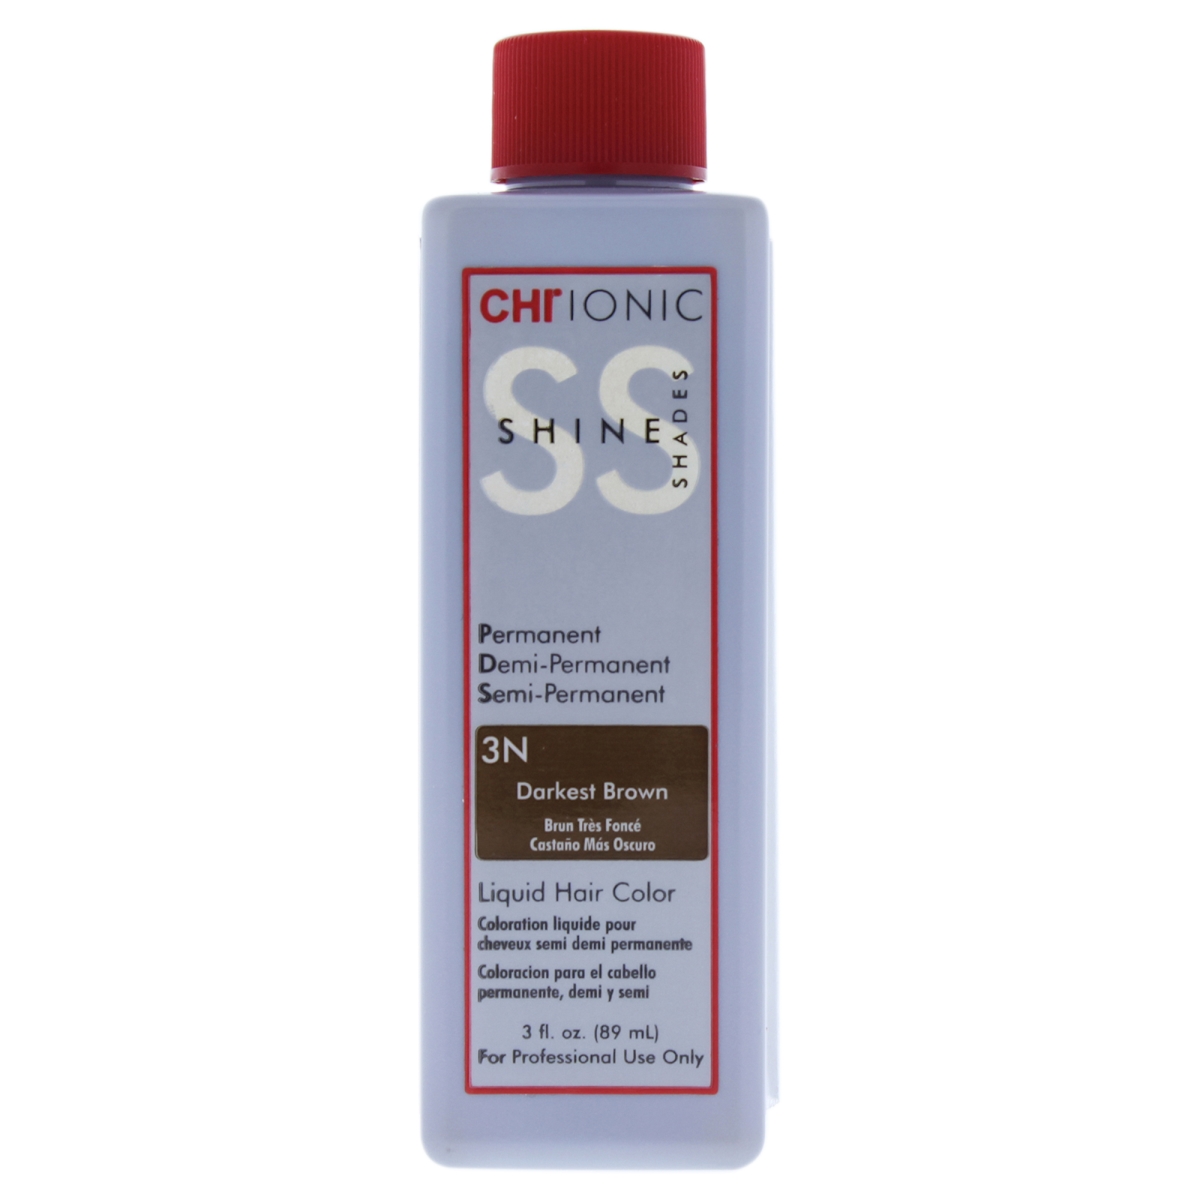 I0084007 Ionic Shine Shades Liquid Hair Color For Unisex - 3n Darkest Brown - 3 Oz